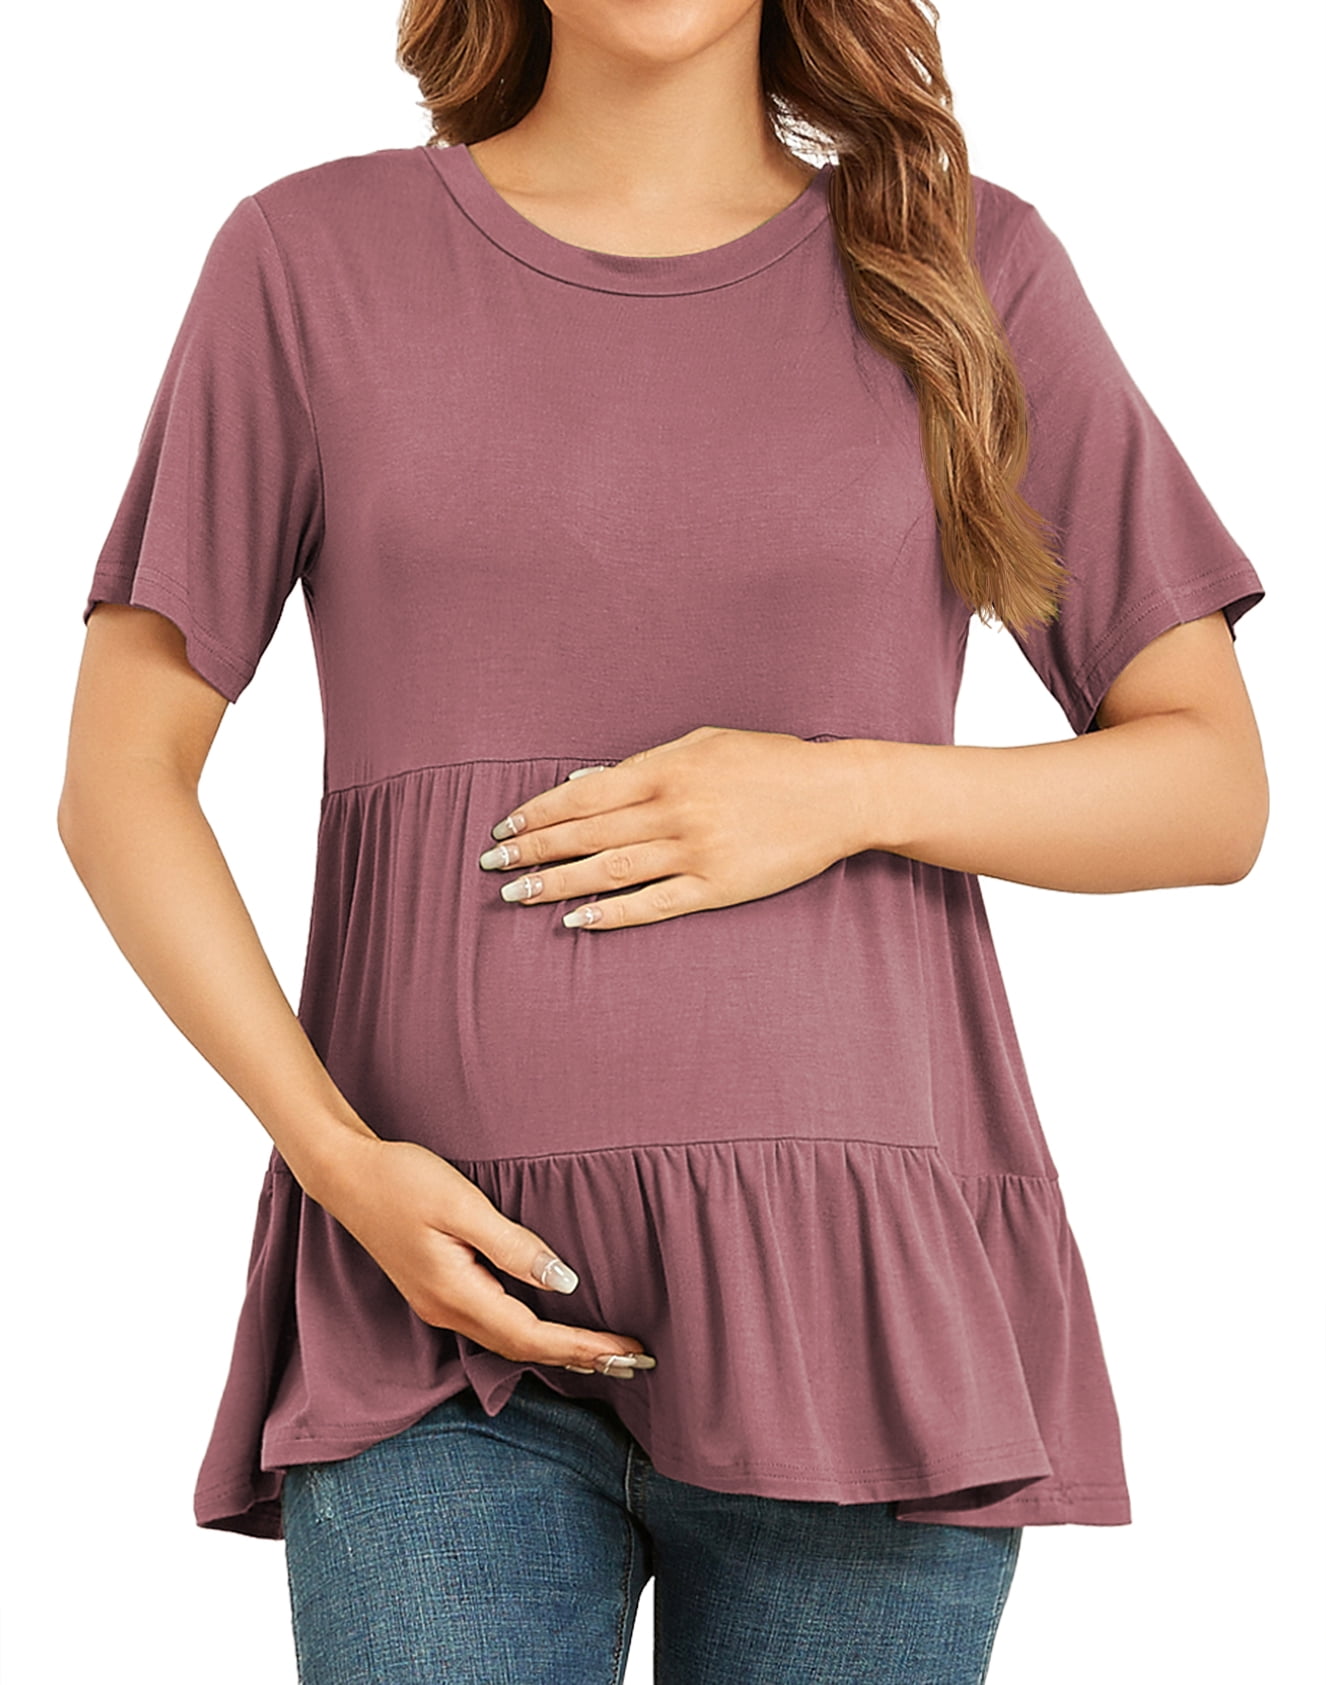 WMT Women Ladies Maternity Long Sleeve Scoop Neck Pregnancy Nursing Top 